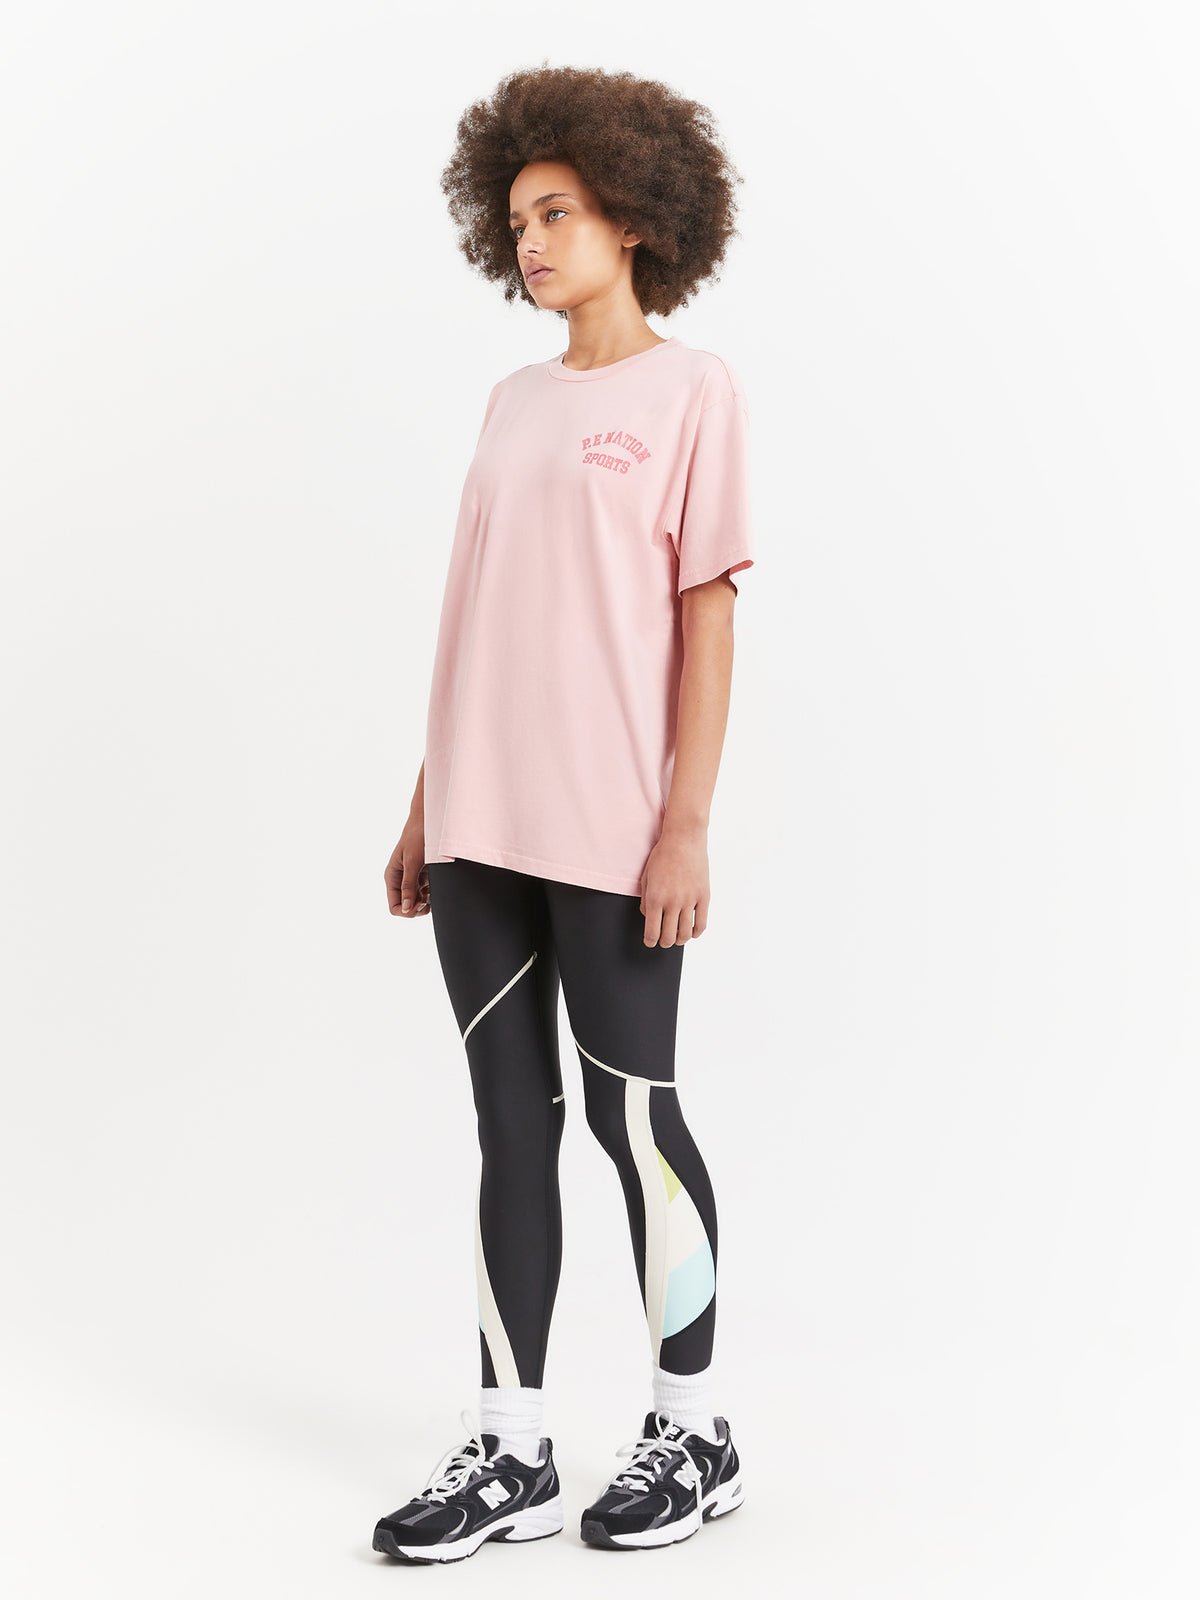 Barkley T-Shirt in Flamingo Pink